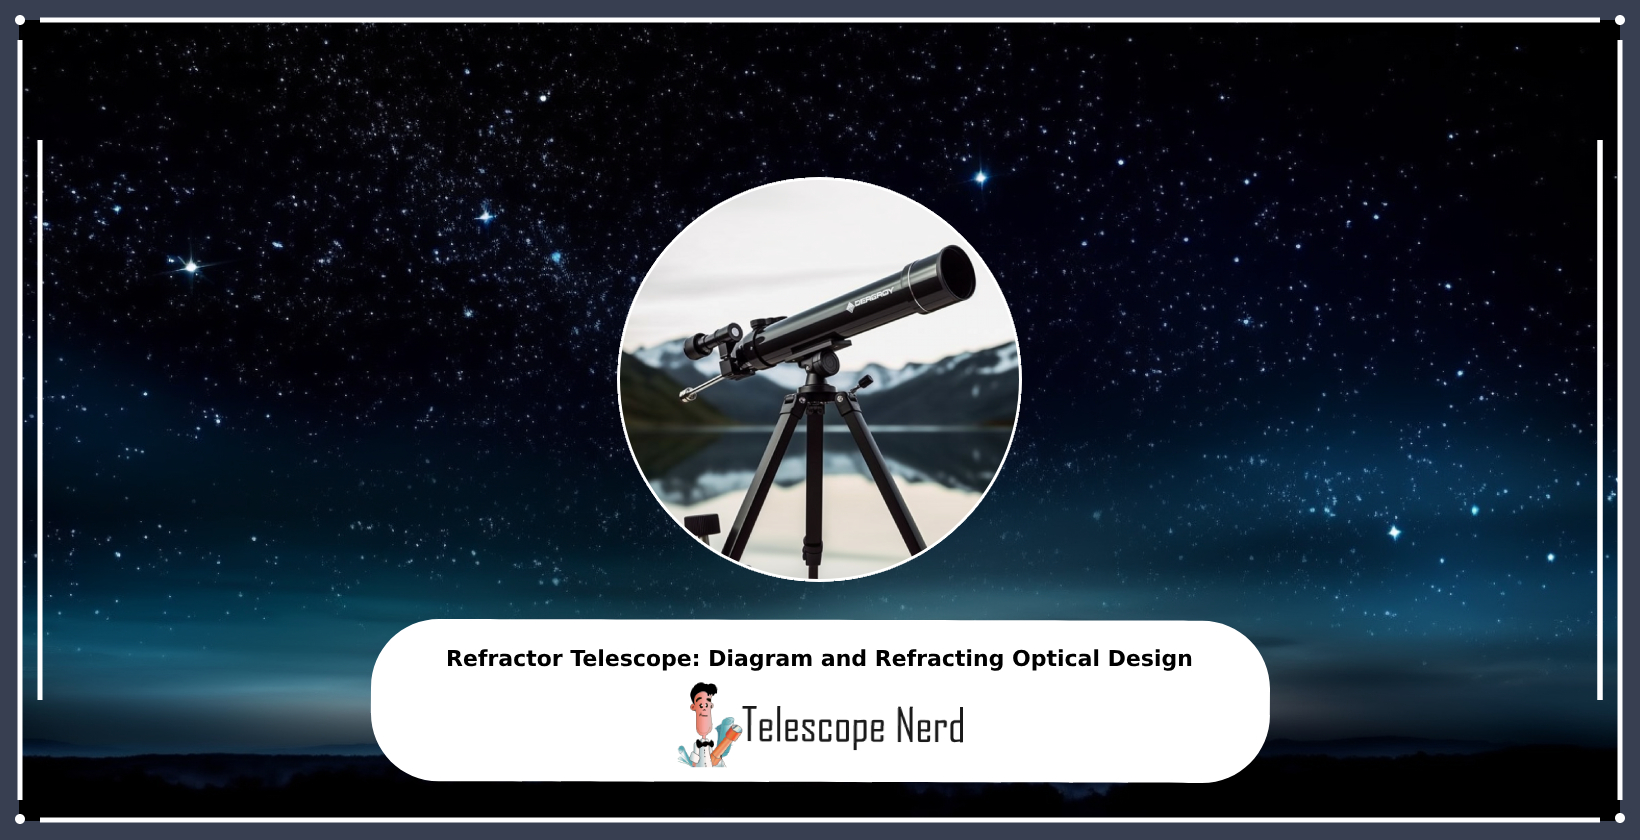 Refractor Telescope: Diagram and Refracting Optical Design